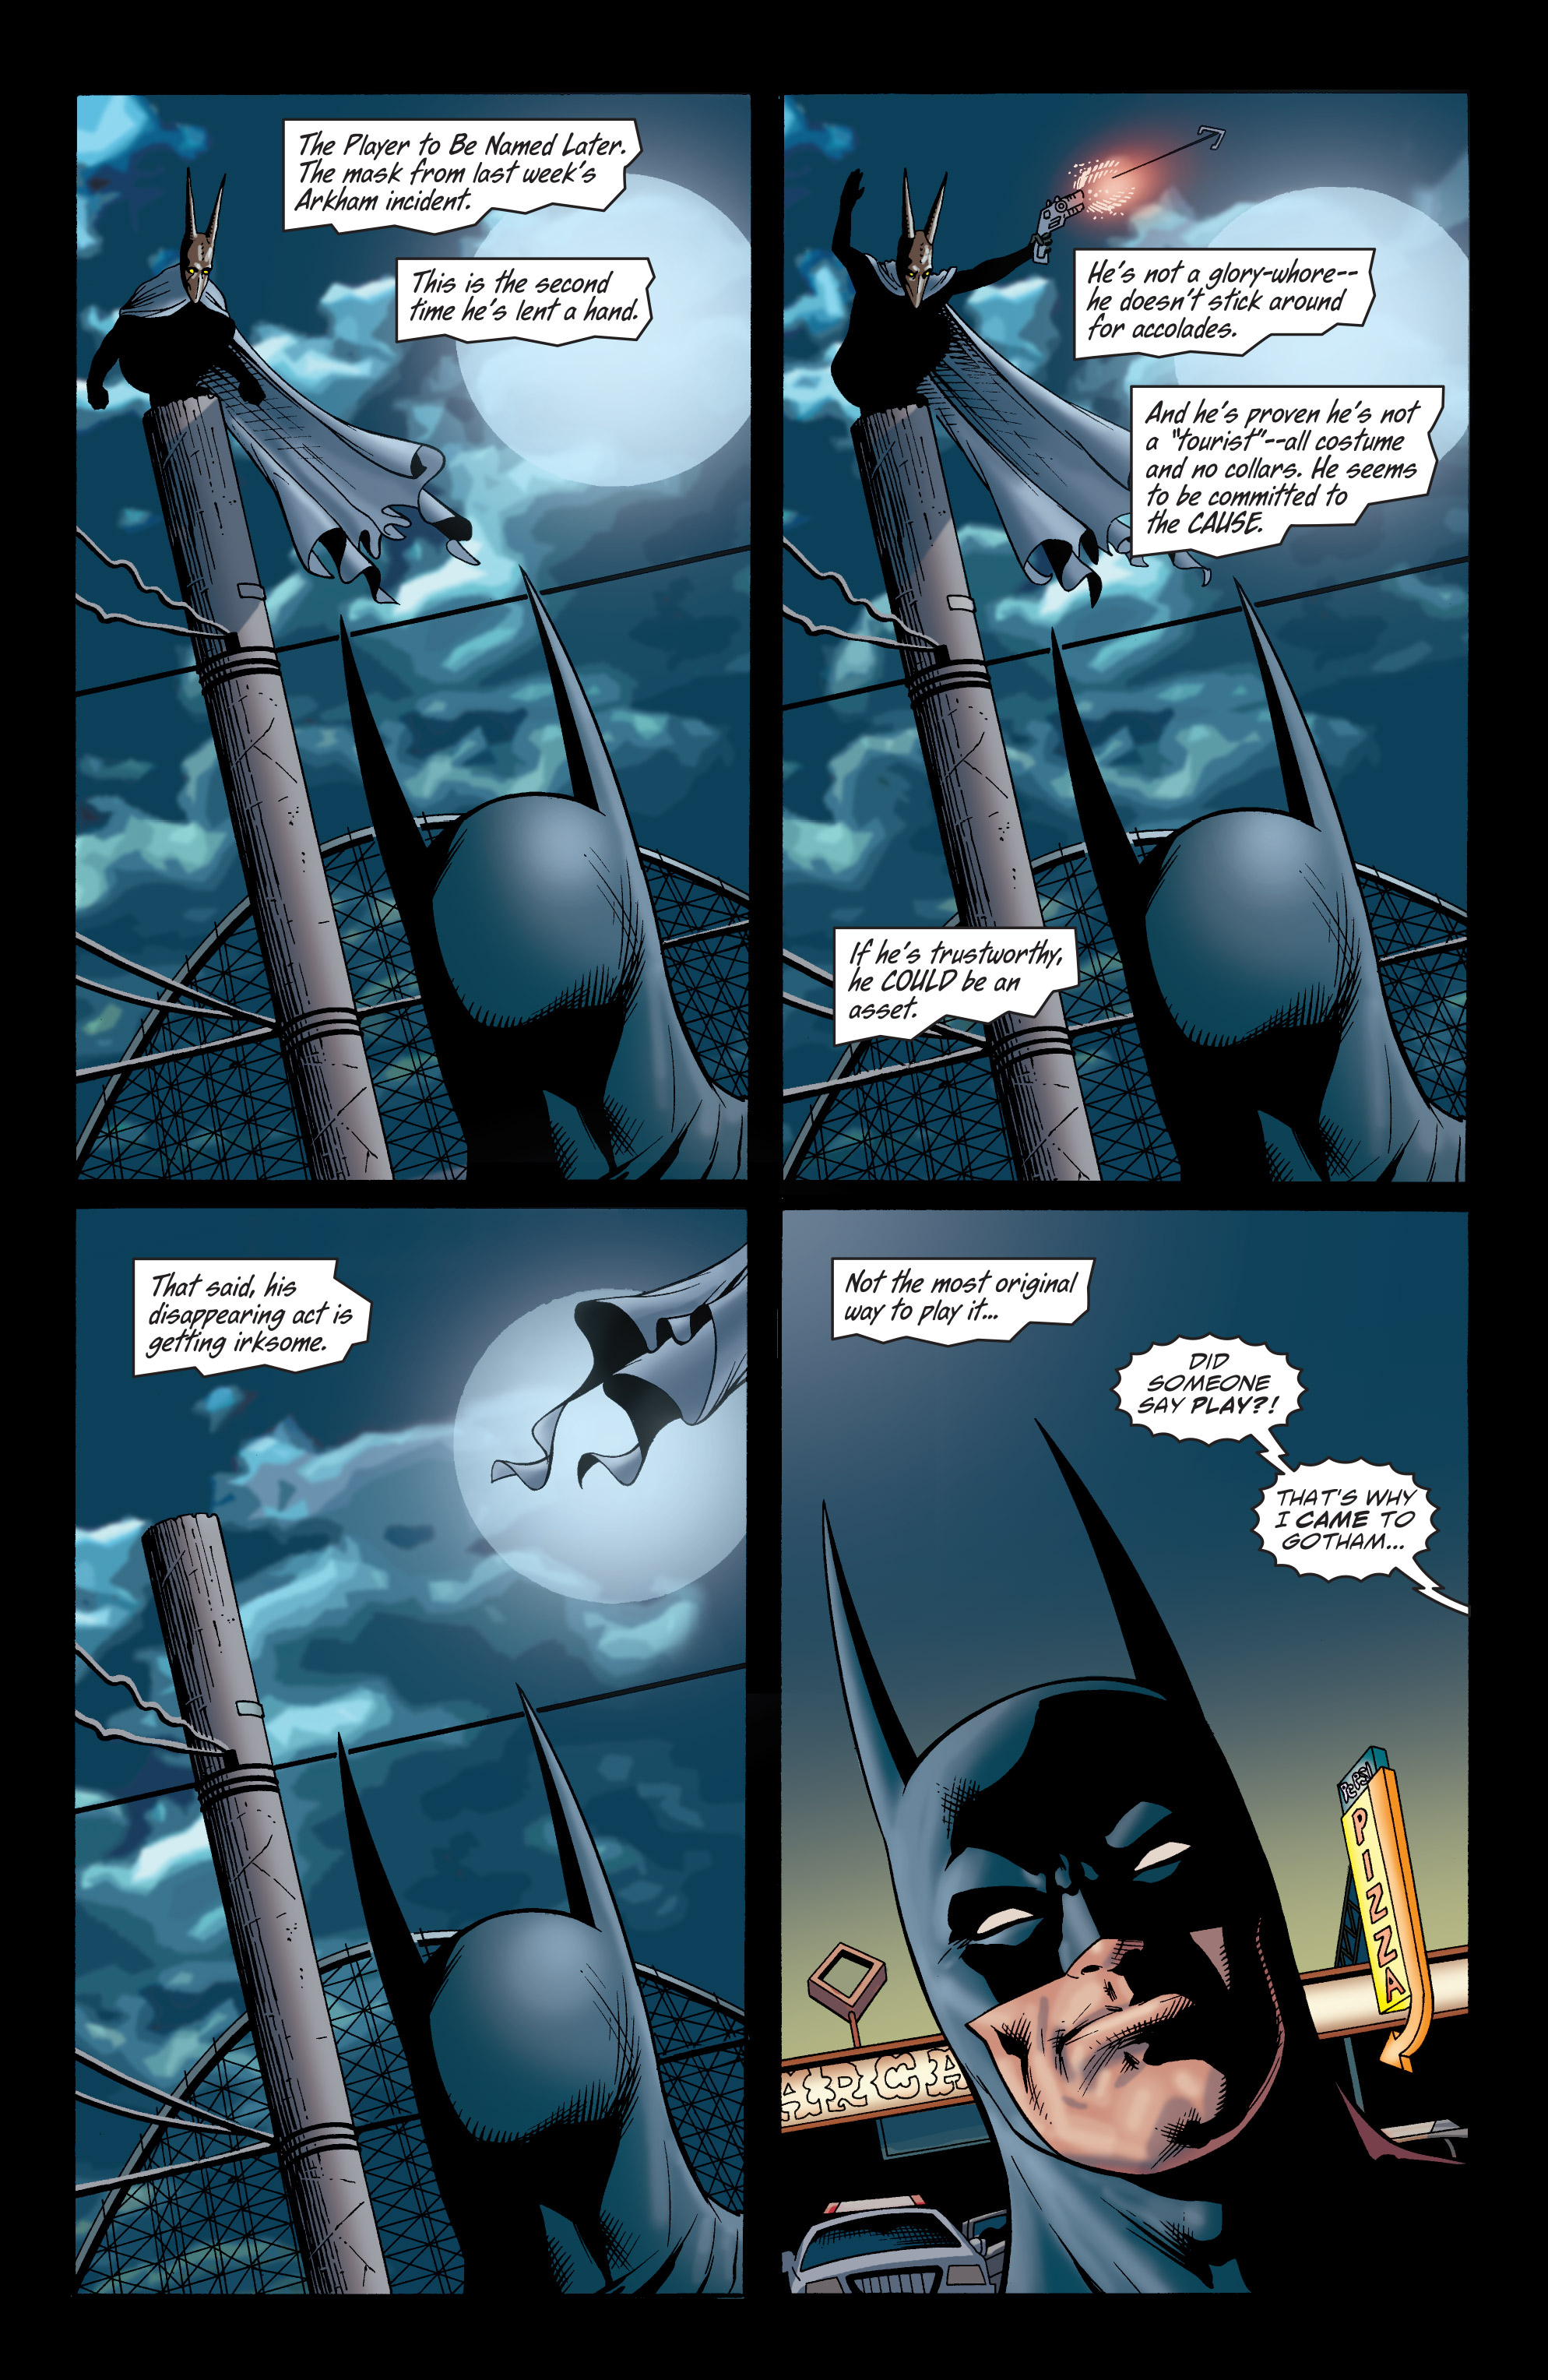 Batman The Widening Gyre Issue 2 | Read Batman The Widening Gyre Issue 2  comic online in high quality. Read Full Comic online for free - Read comics  online in high quality .|